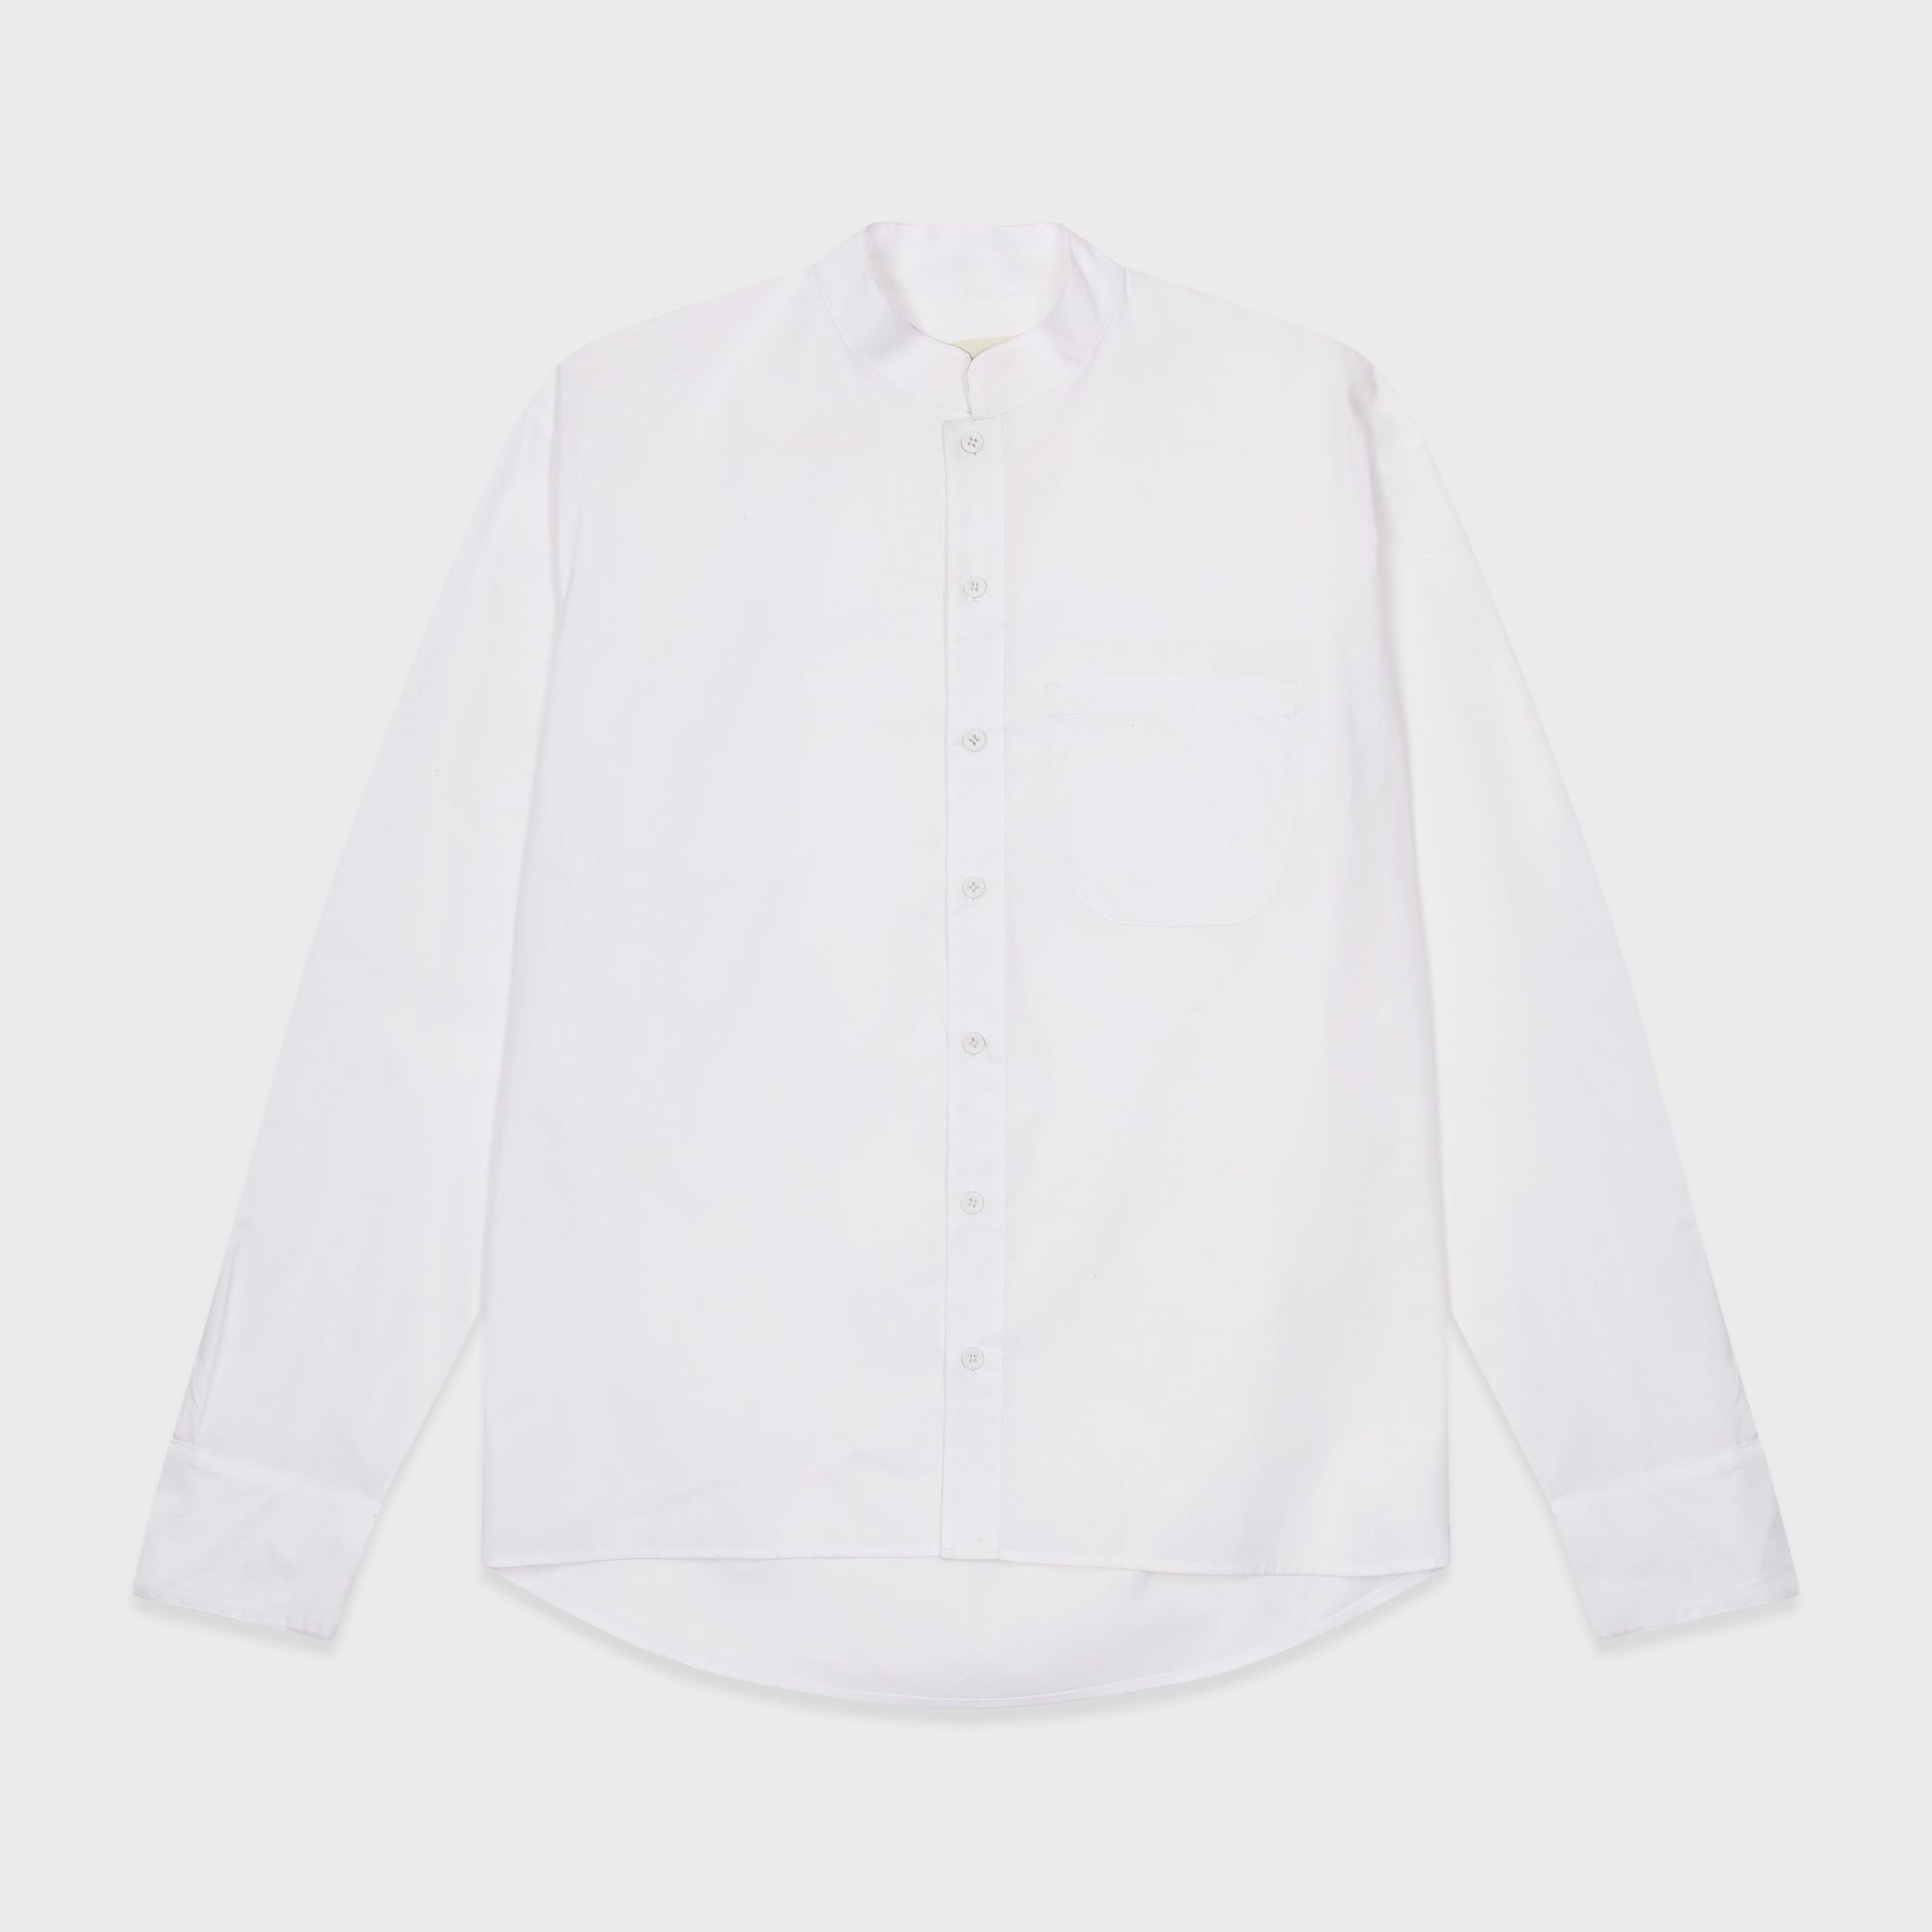 Priesthood Button up Shirt